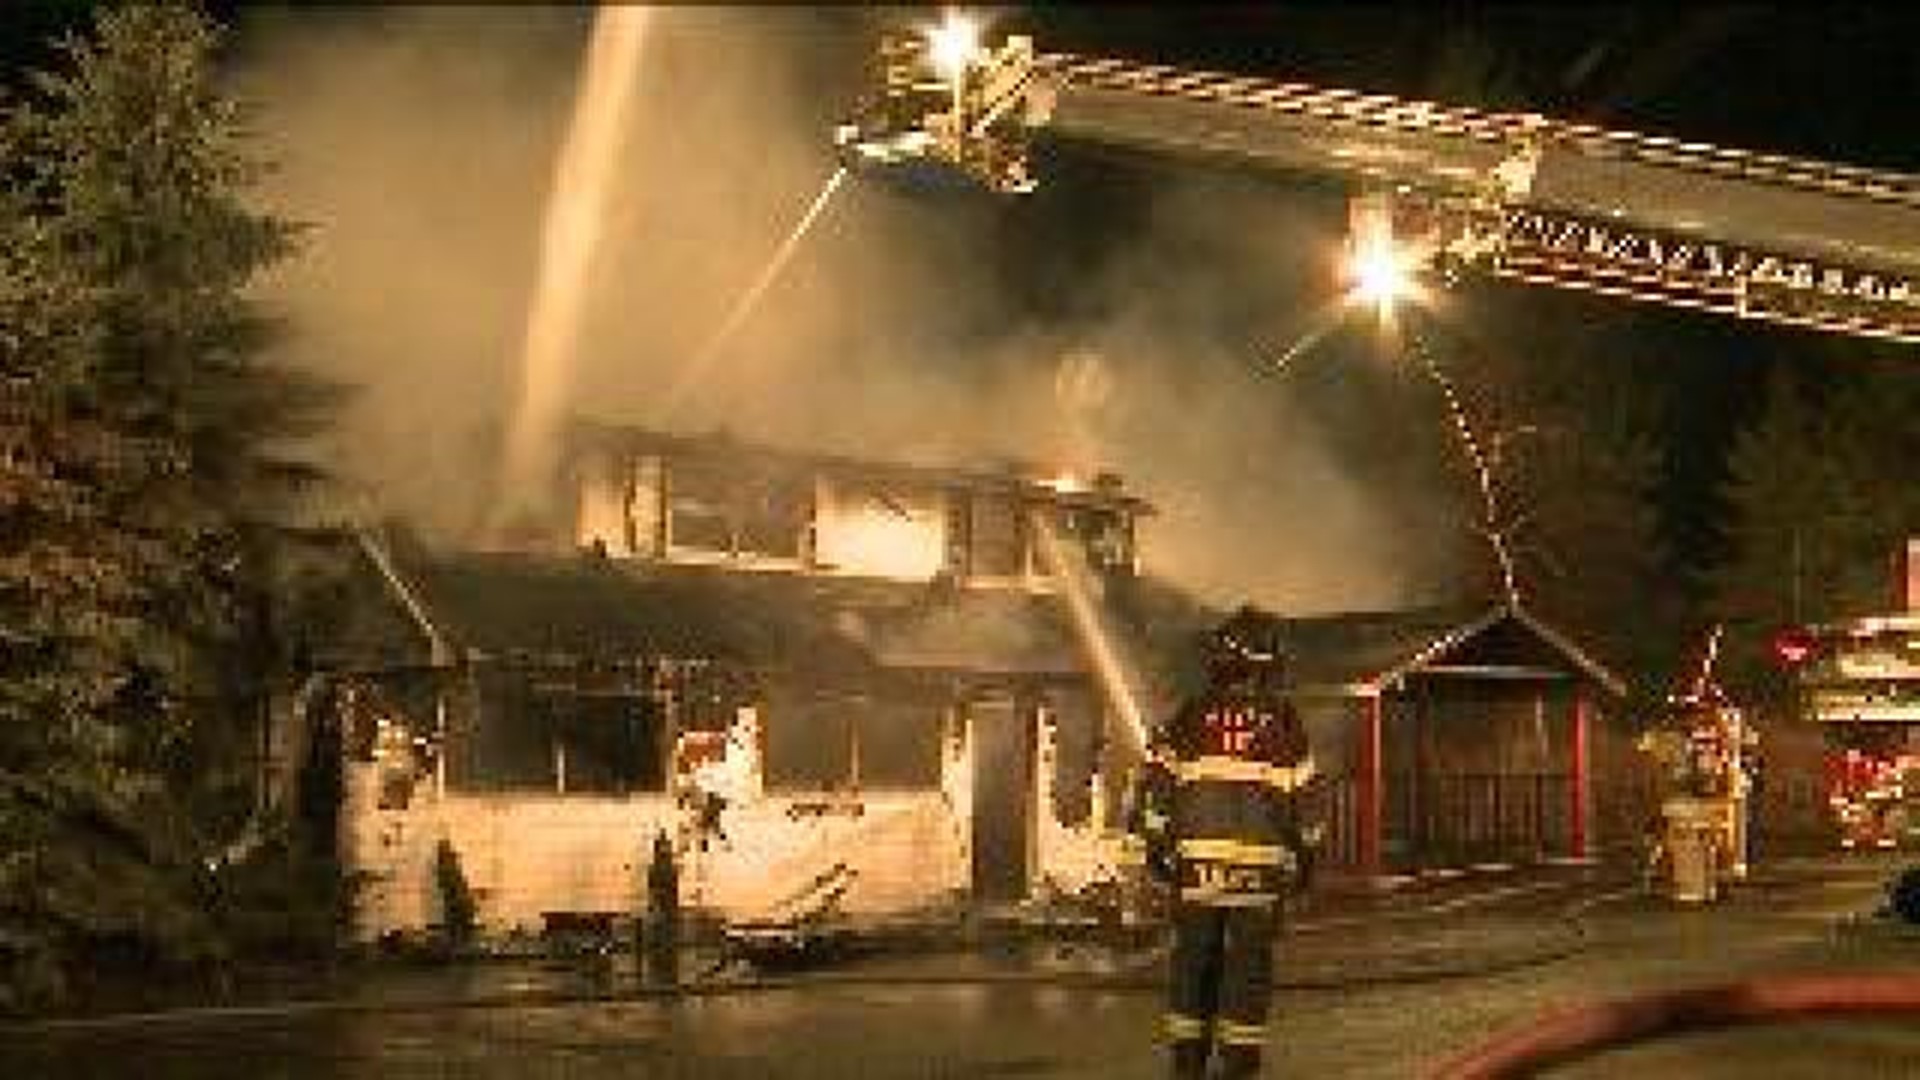 Firefighters Battle Massive Blaze At Damenti's